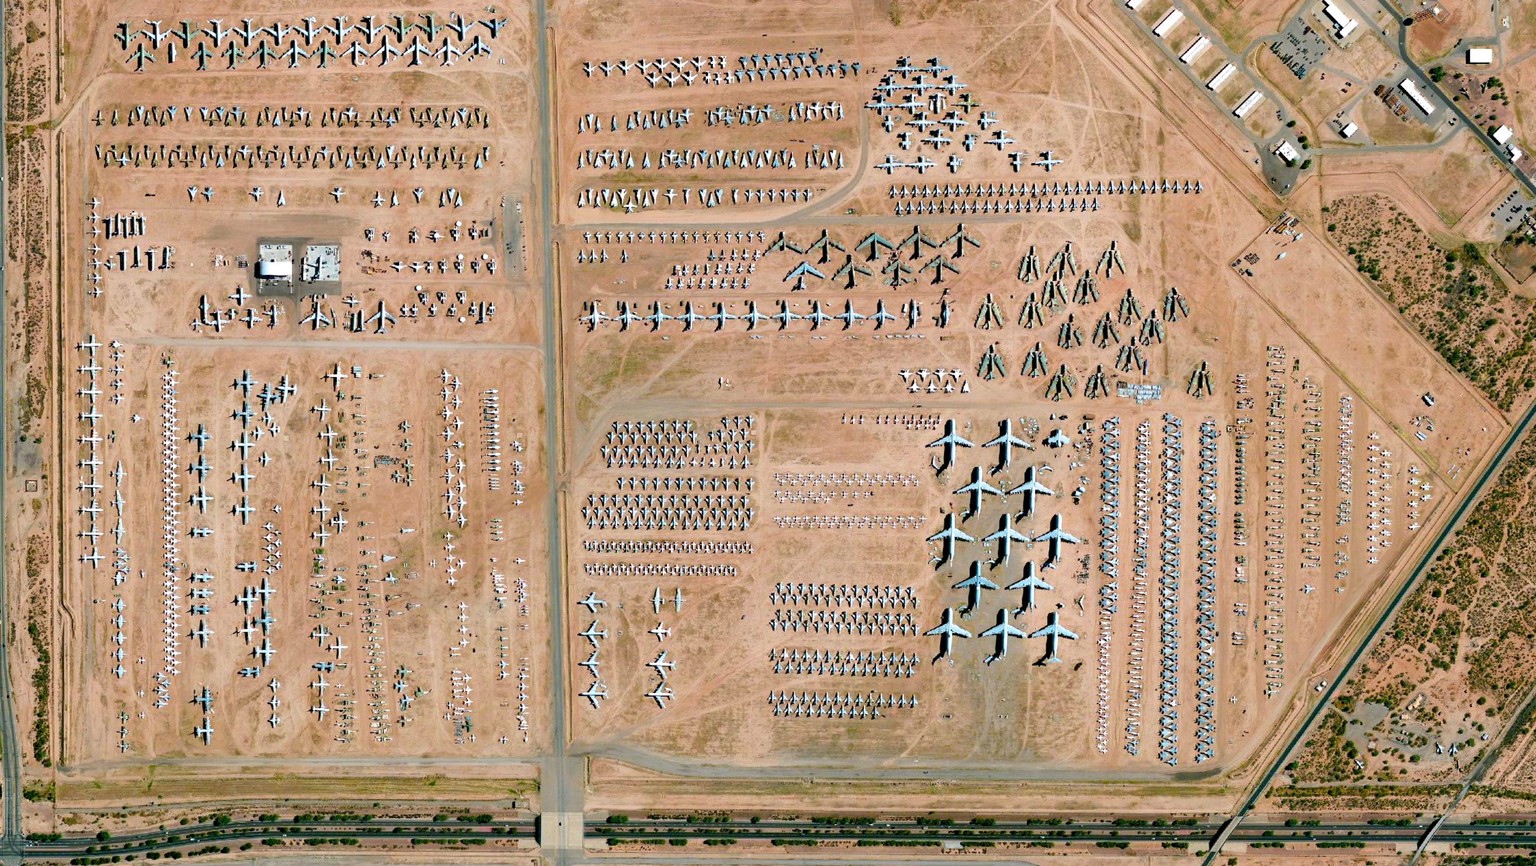 Davis-Monthan Flugzeug-Friedhof, Arizona.